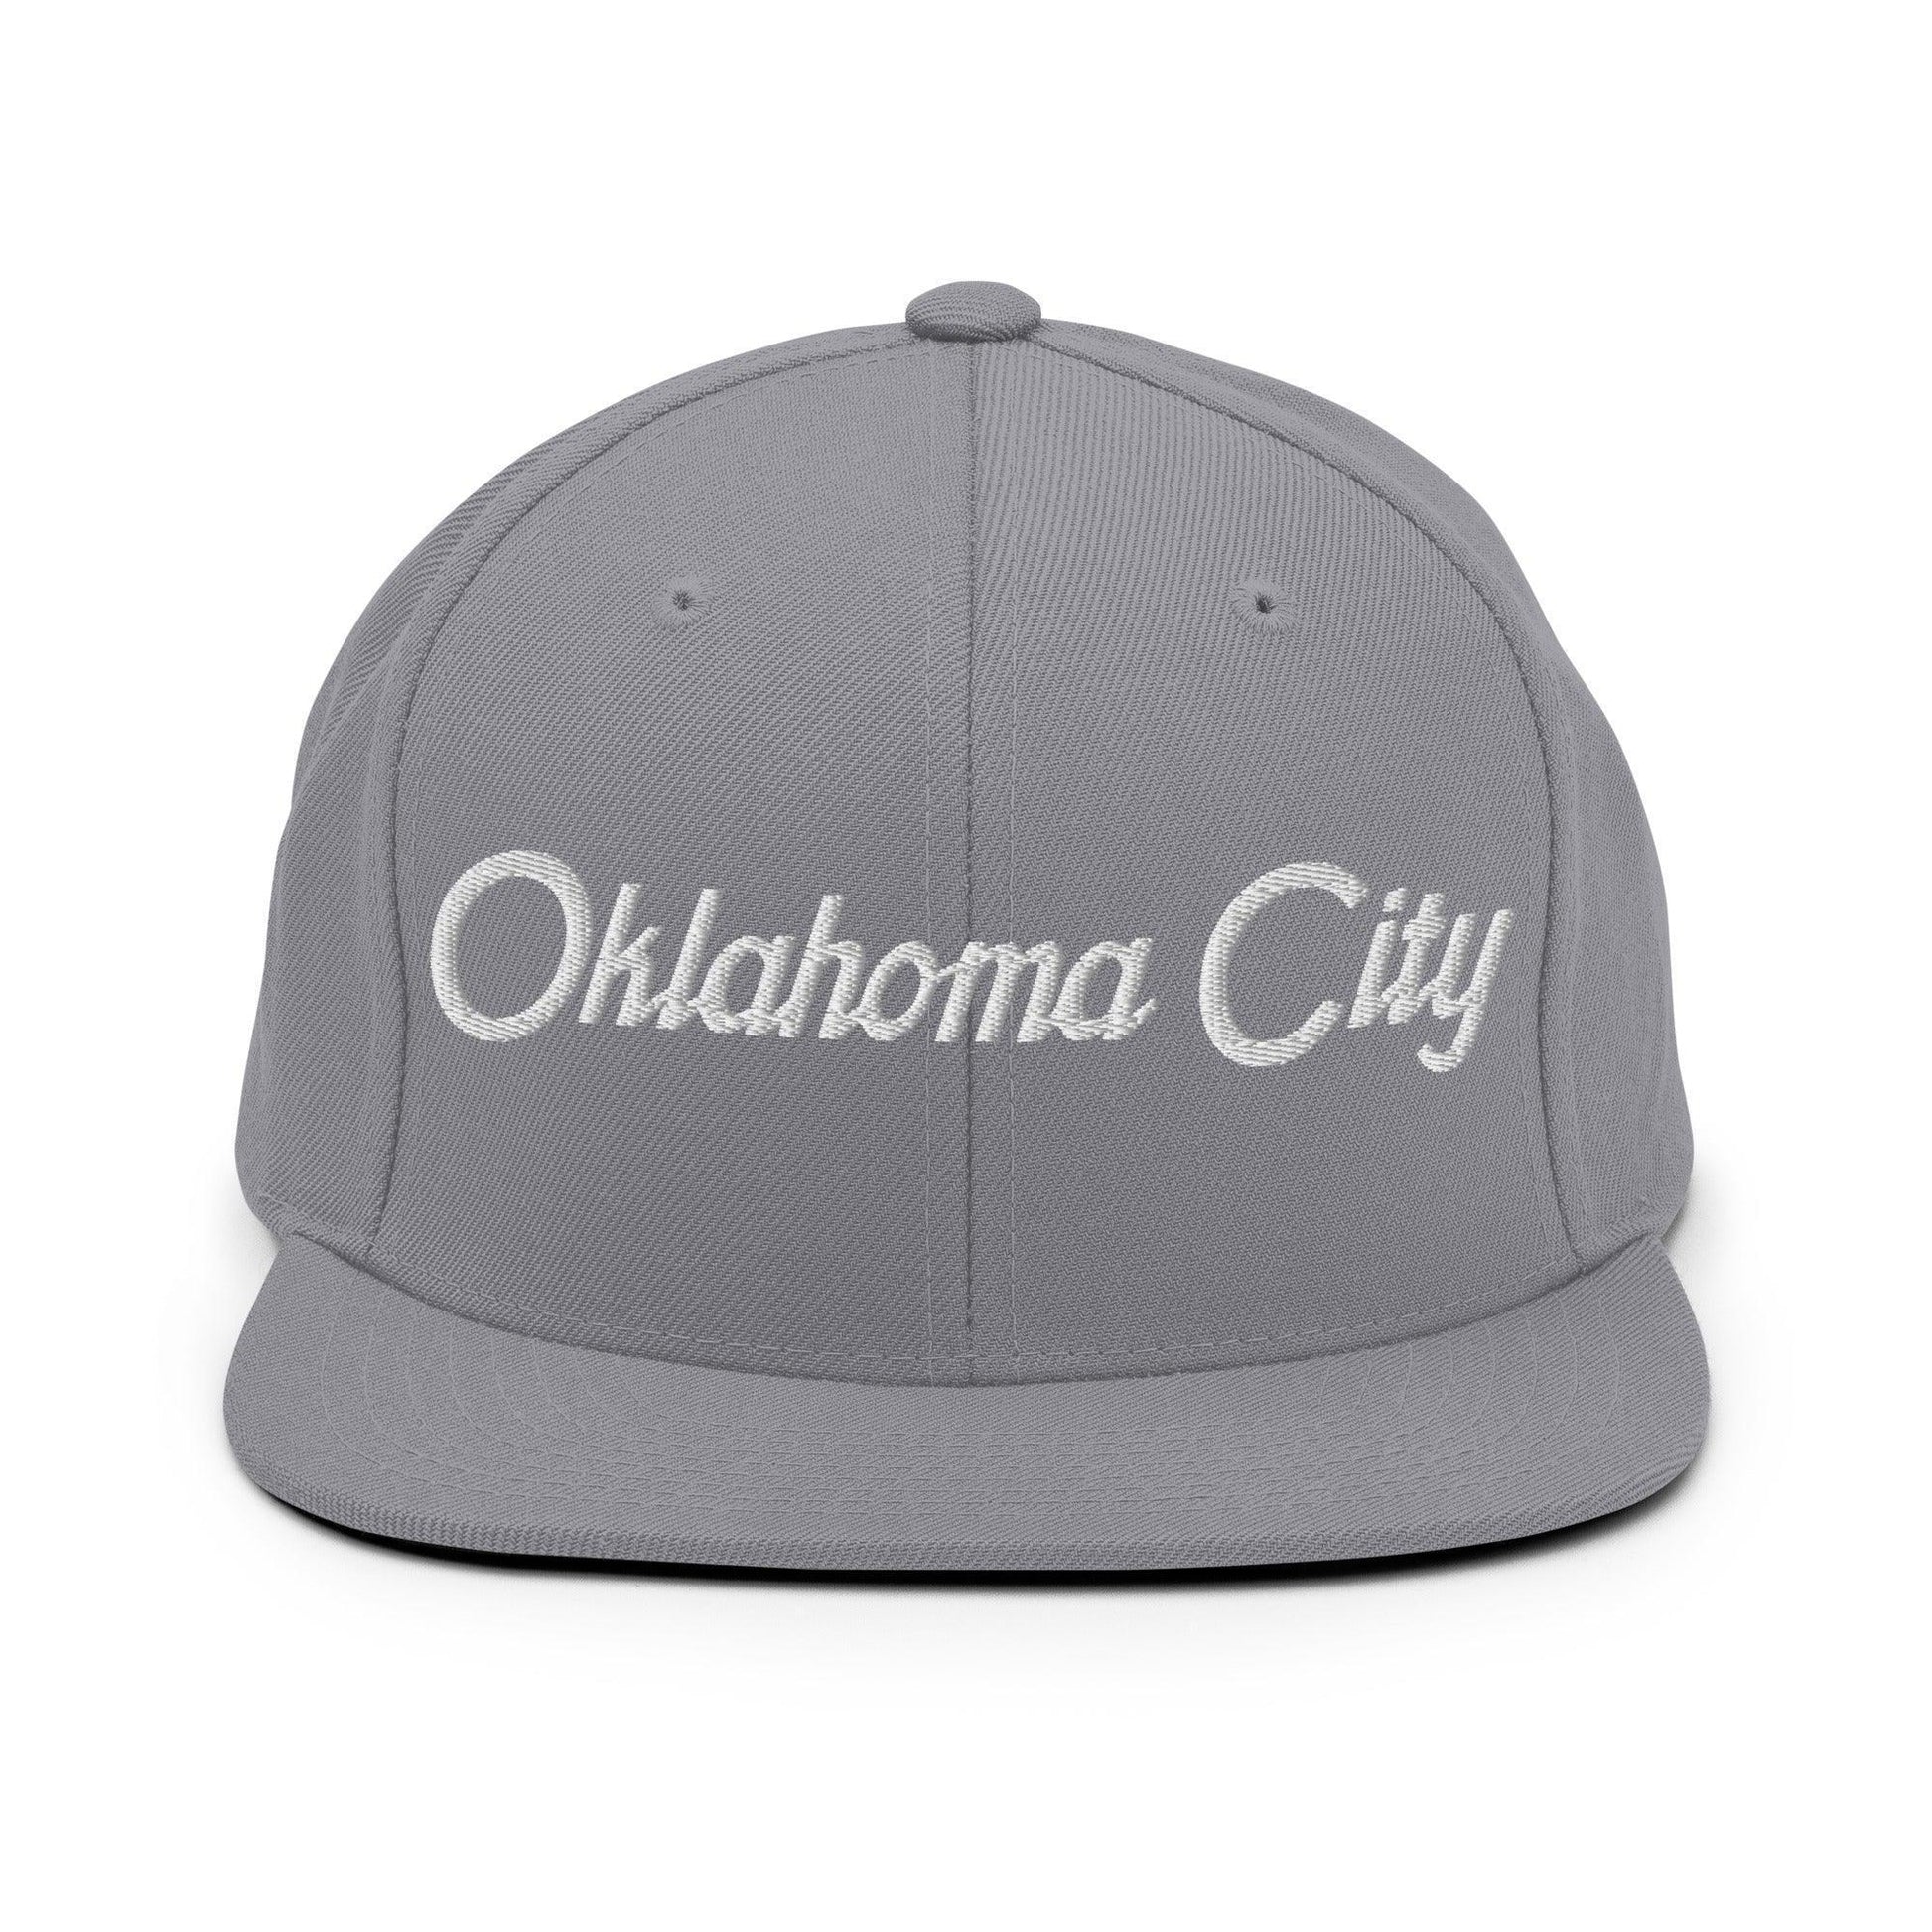 Oklahoma City Script Snapback Hat Silver